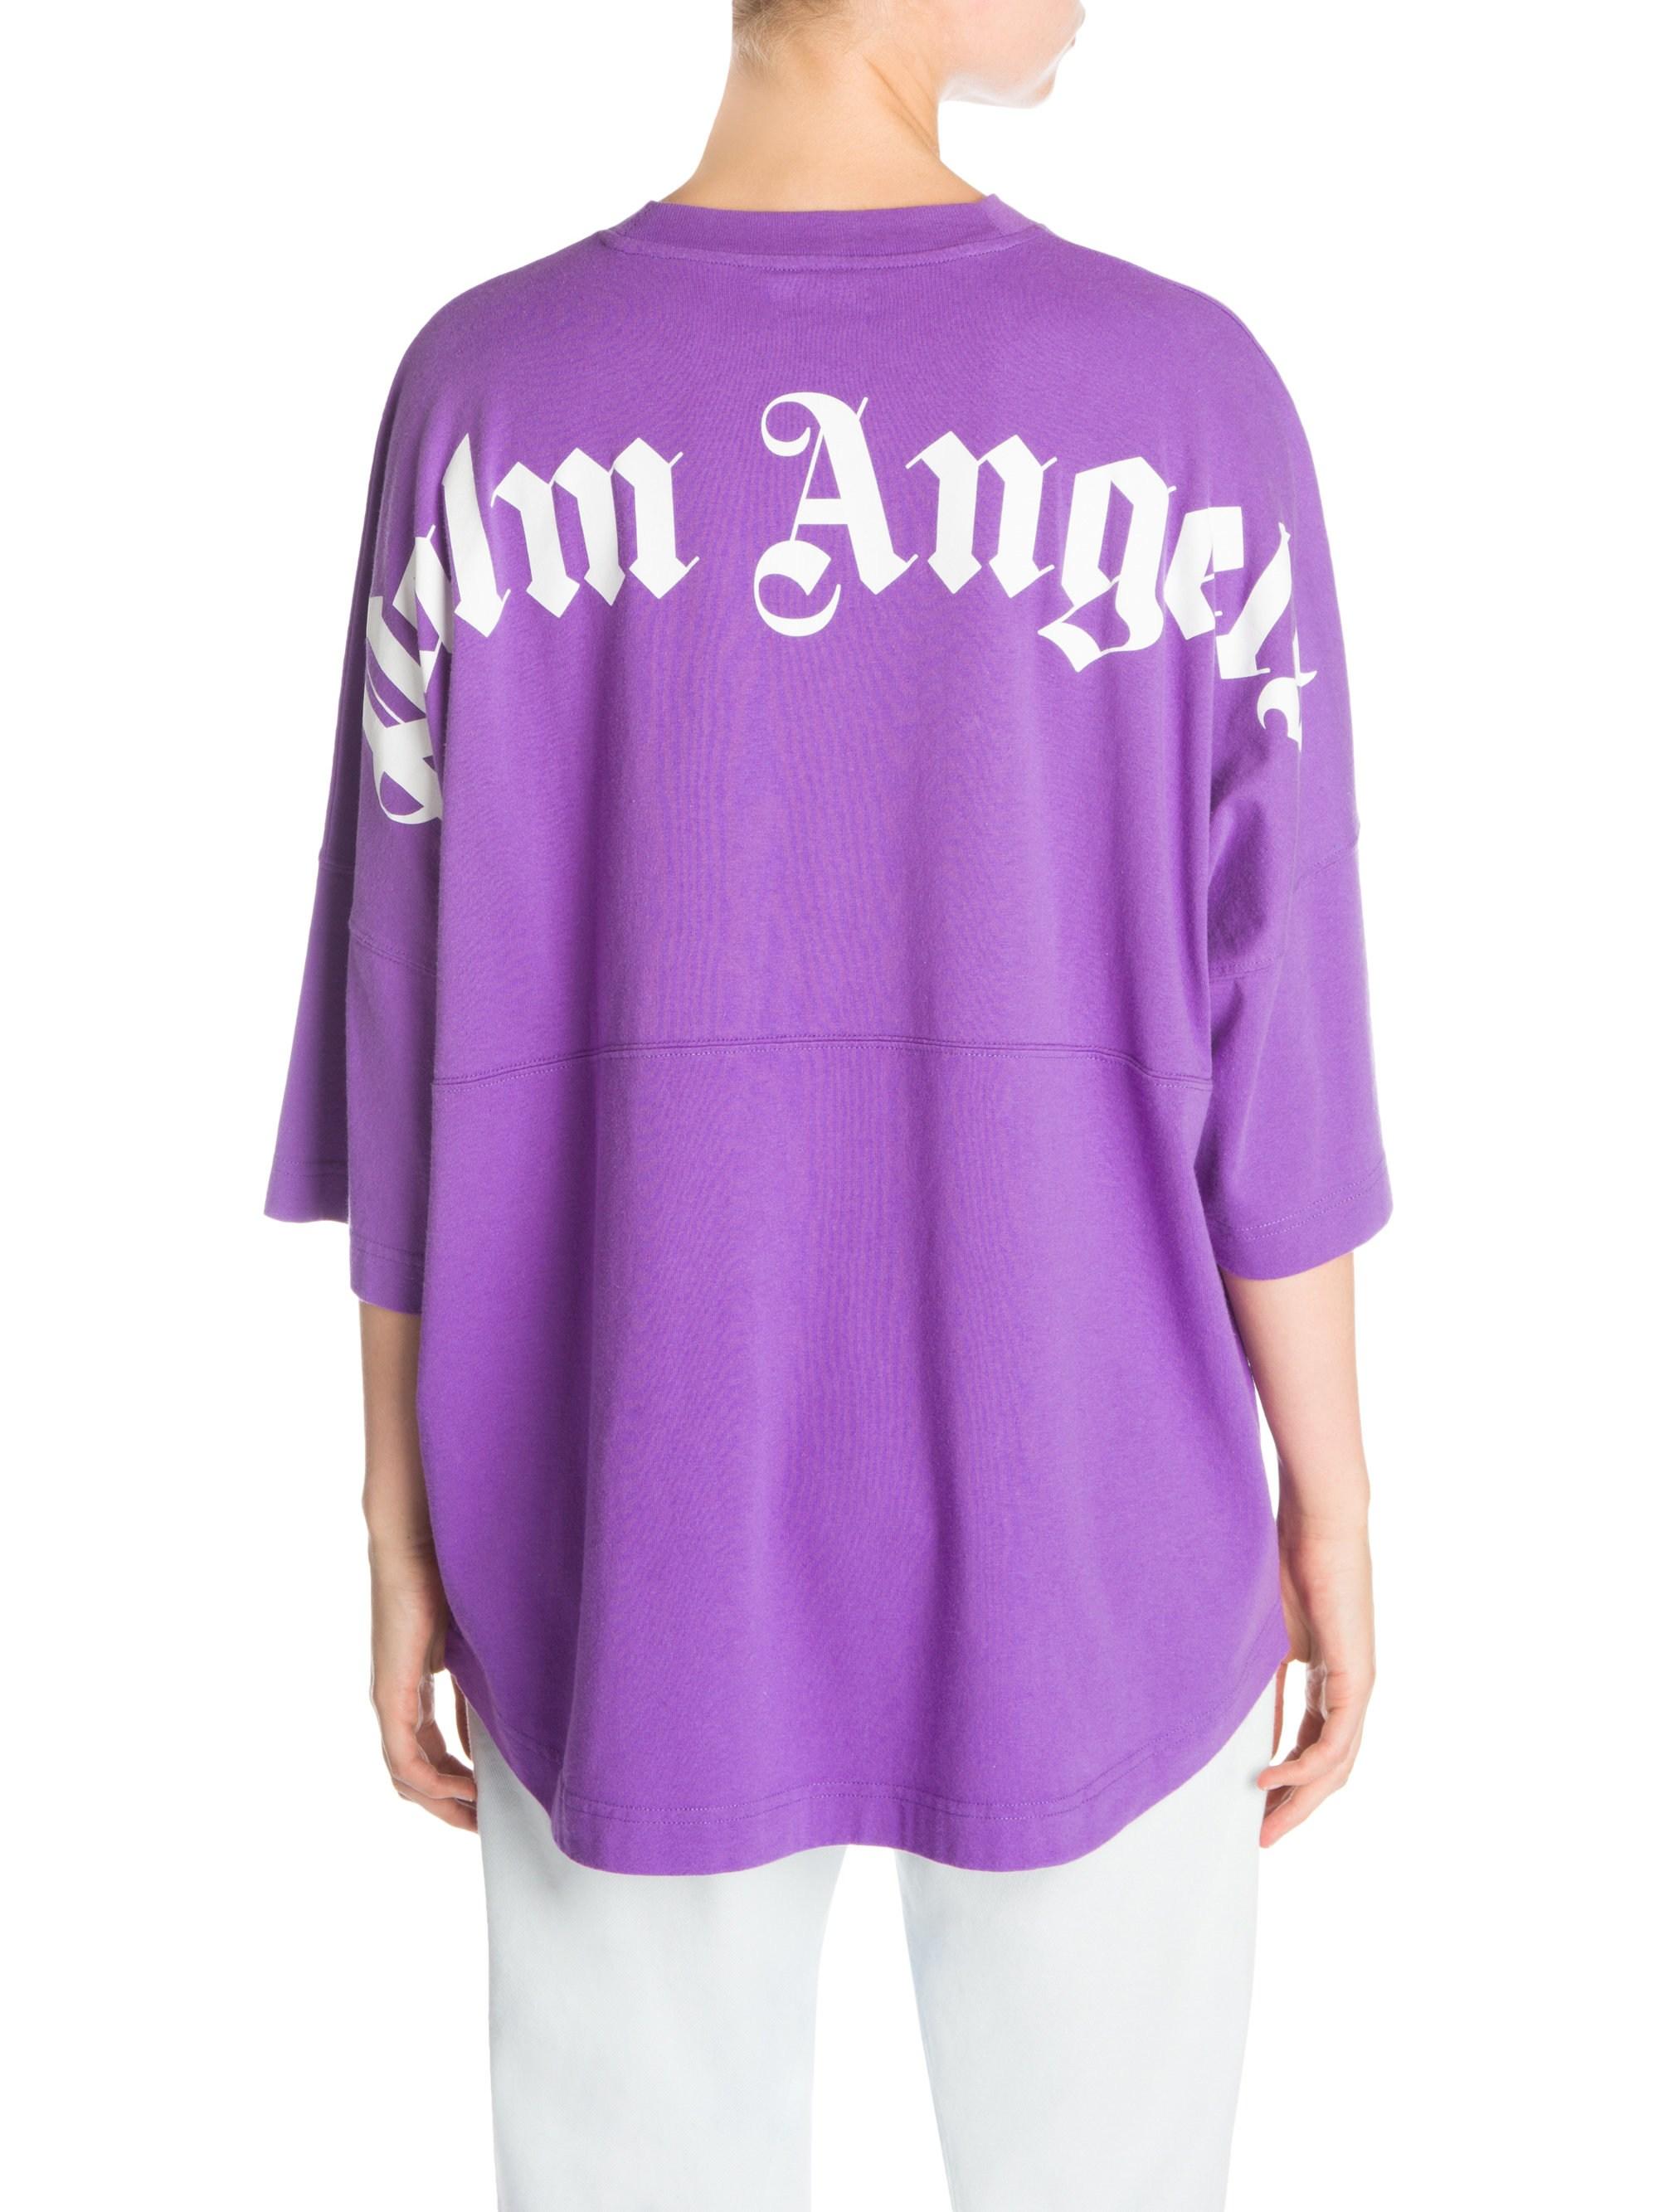 palm angels purple t shirt